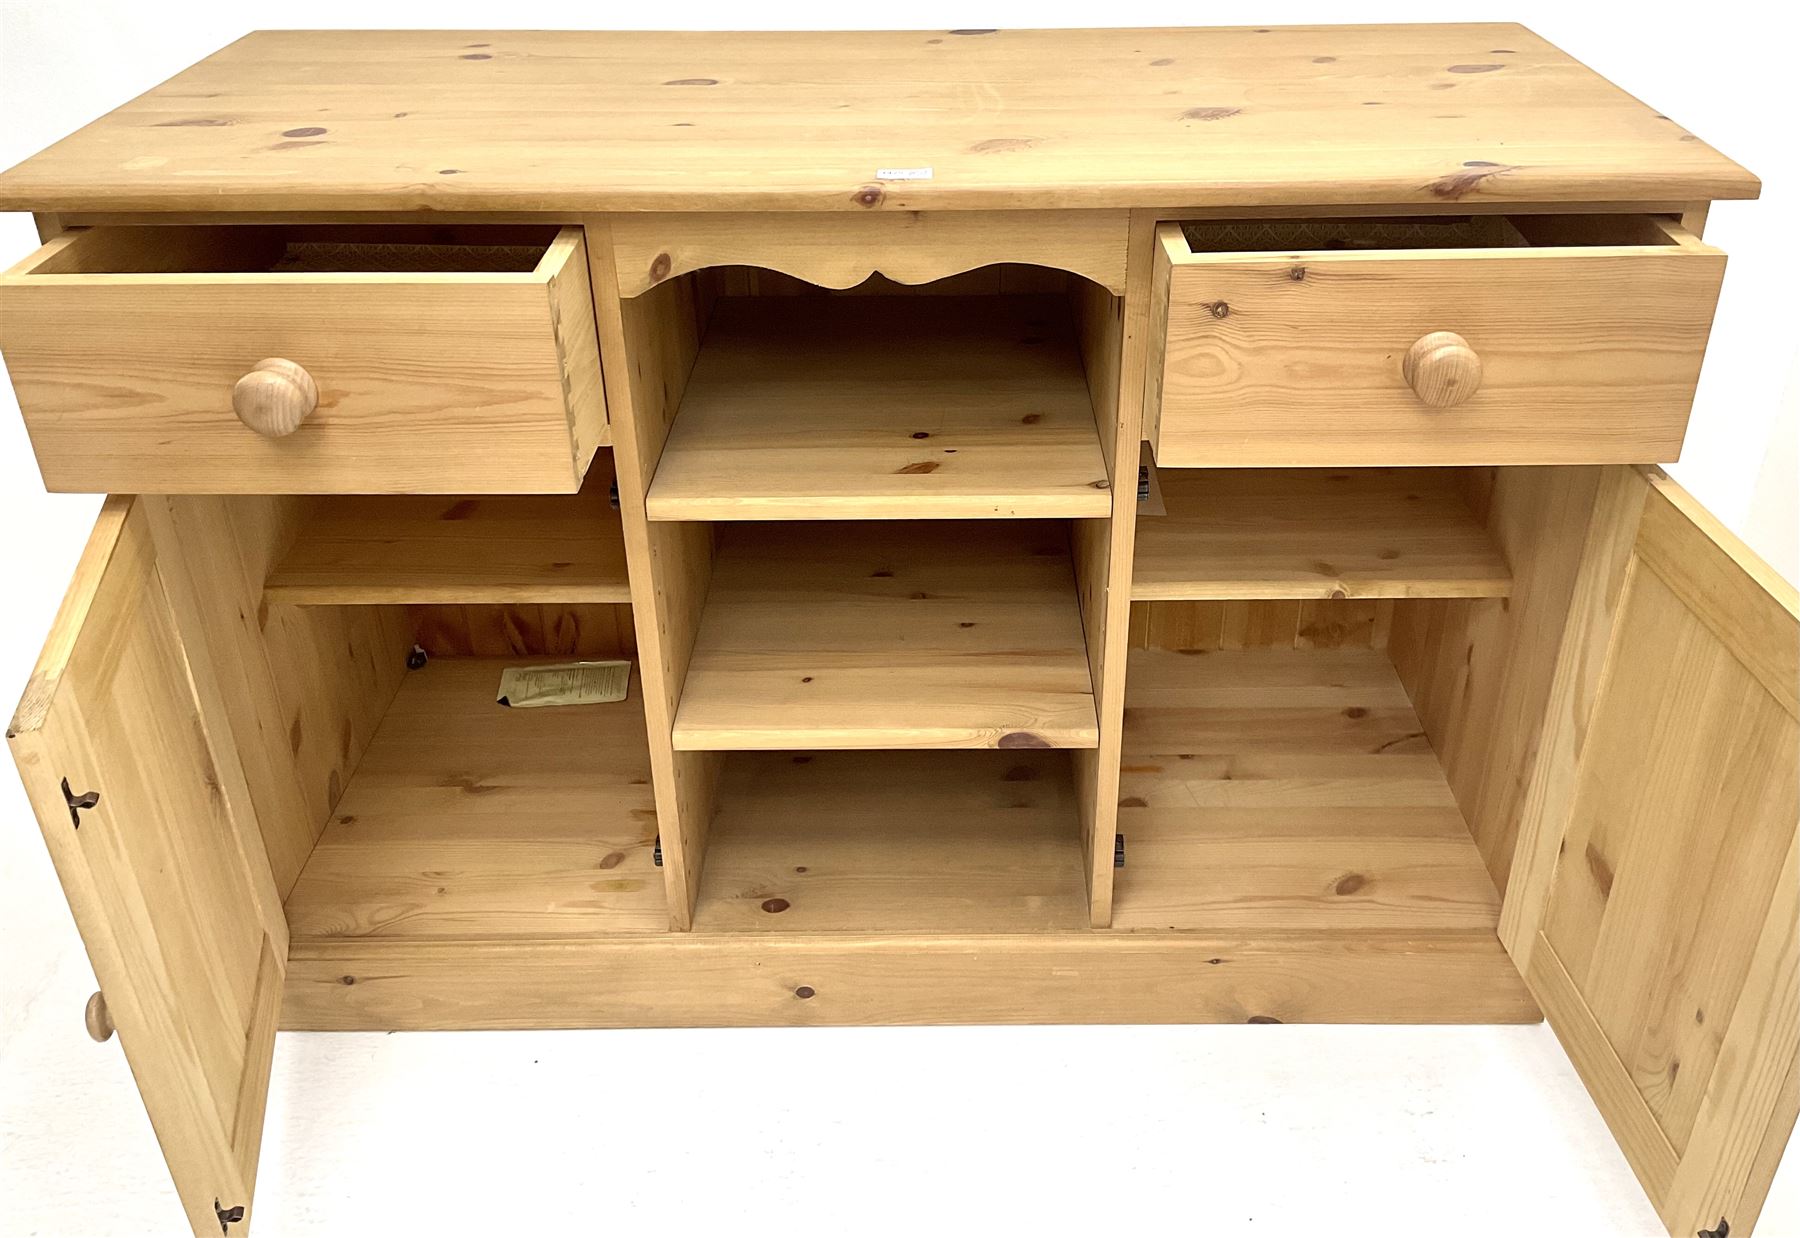 Soldi pine farmhouse style dresser - Image 3 of 3